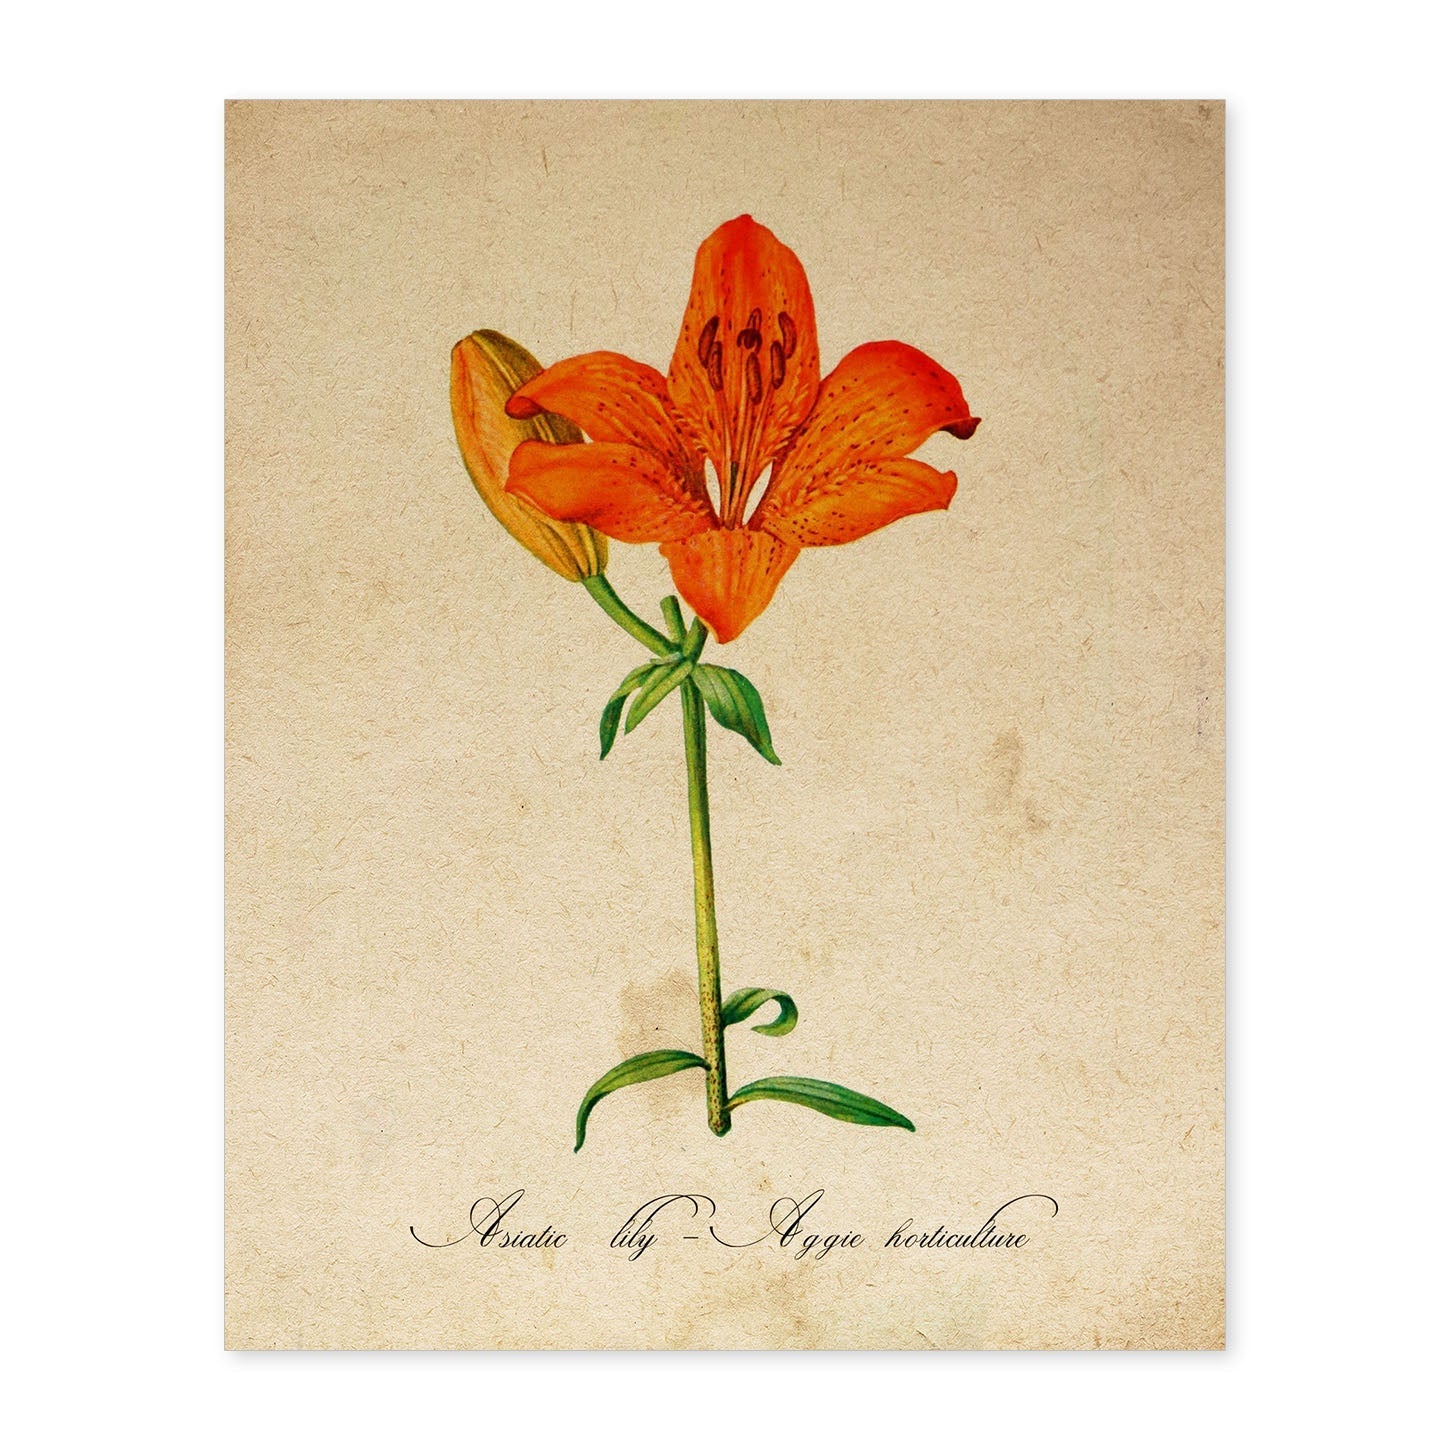 Poster de flores vintage. Lámina Asiatic Lily - Aggie Horticulture con diseño vintage.-Artwork-Nacnic-A4-Sin marco-Nacnic Estudio SL